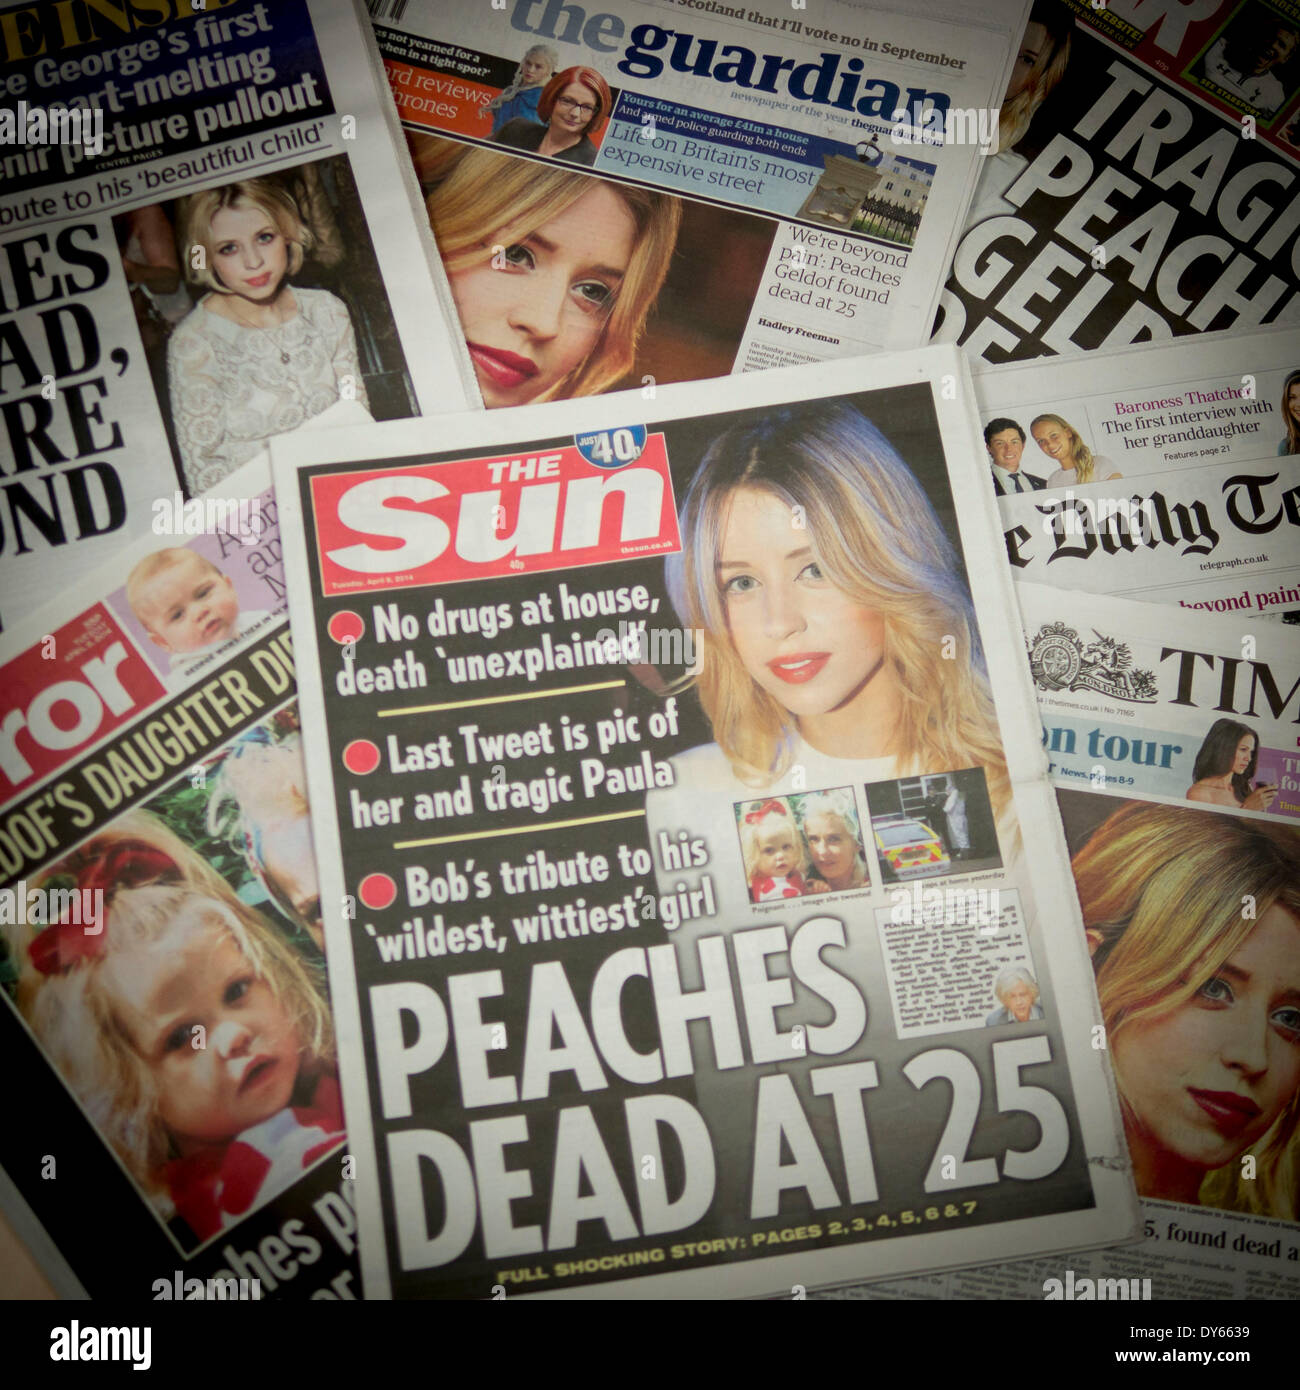 Peaches Geldof dies at 25 : r/news